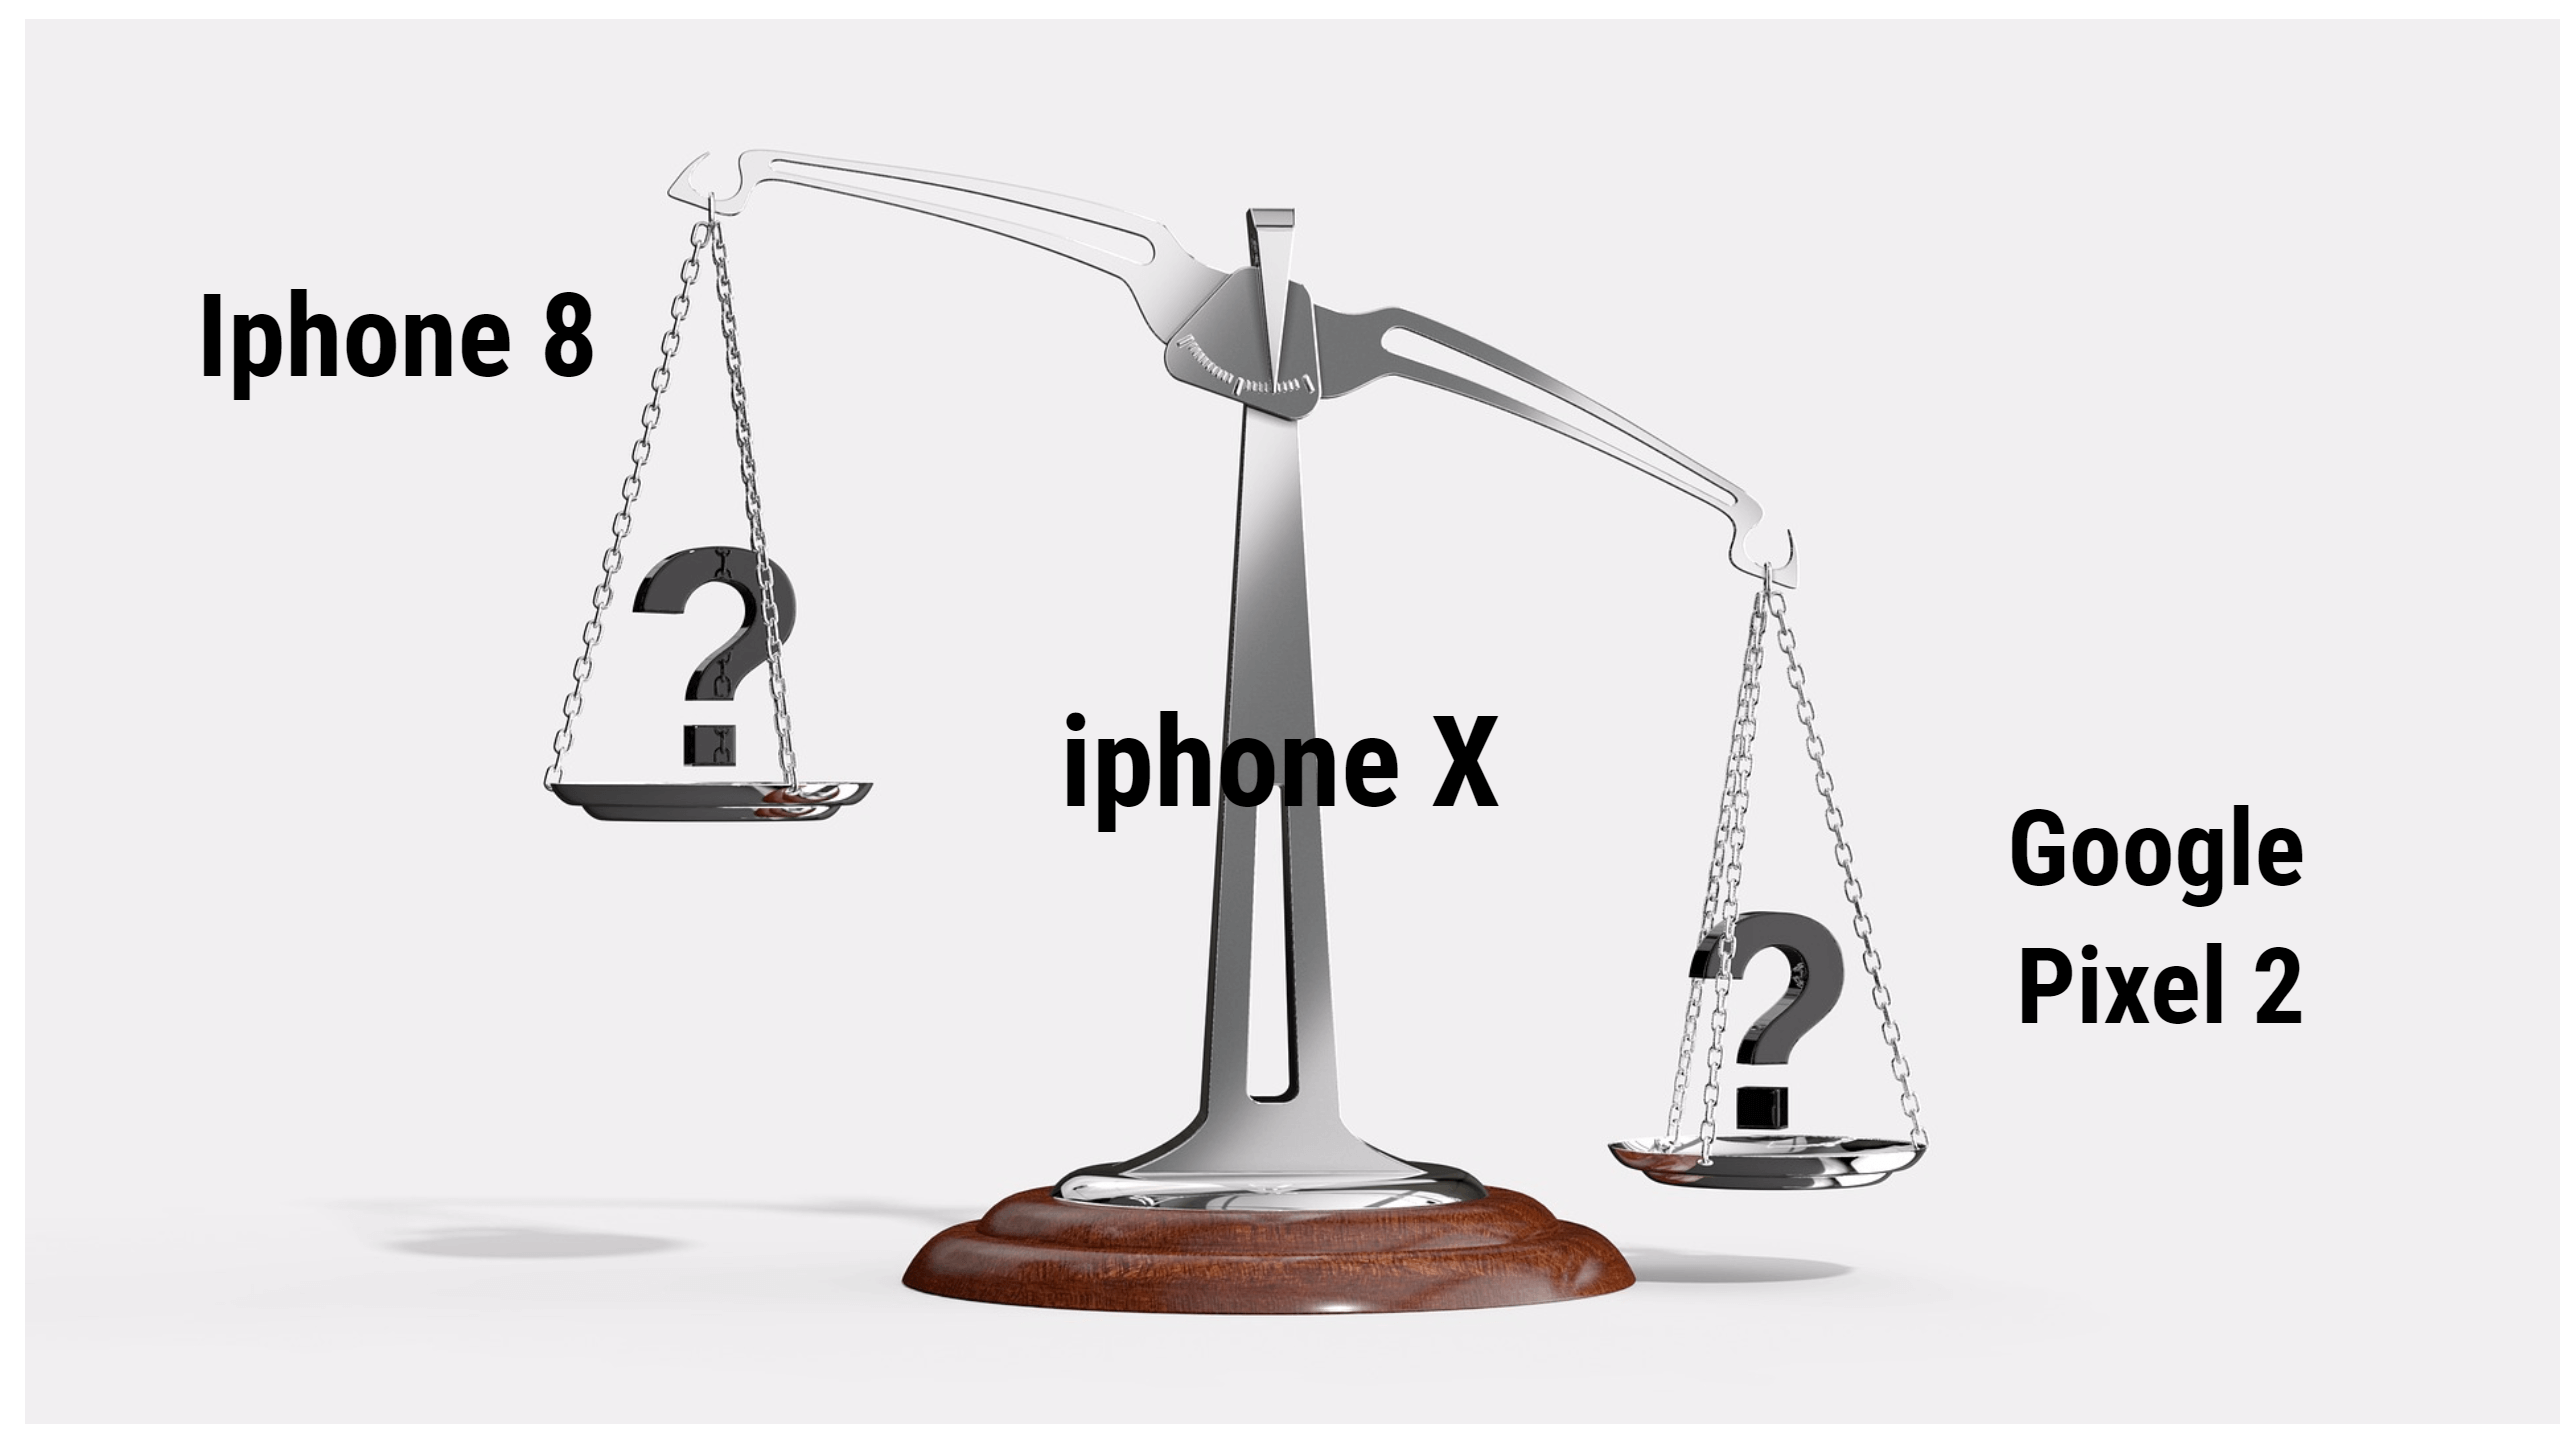 Compare iPhone 8 vs iPhone X vs Google Pixel 2